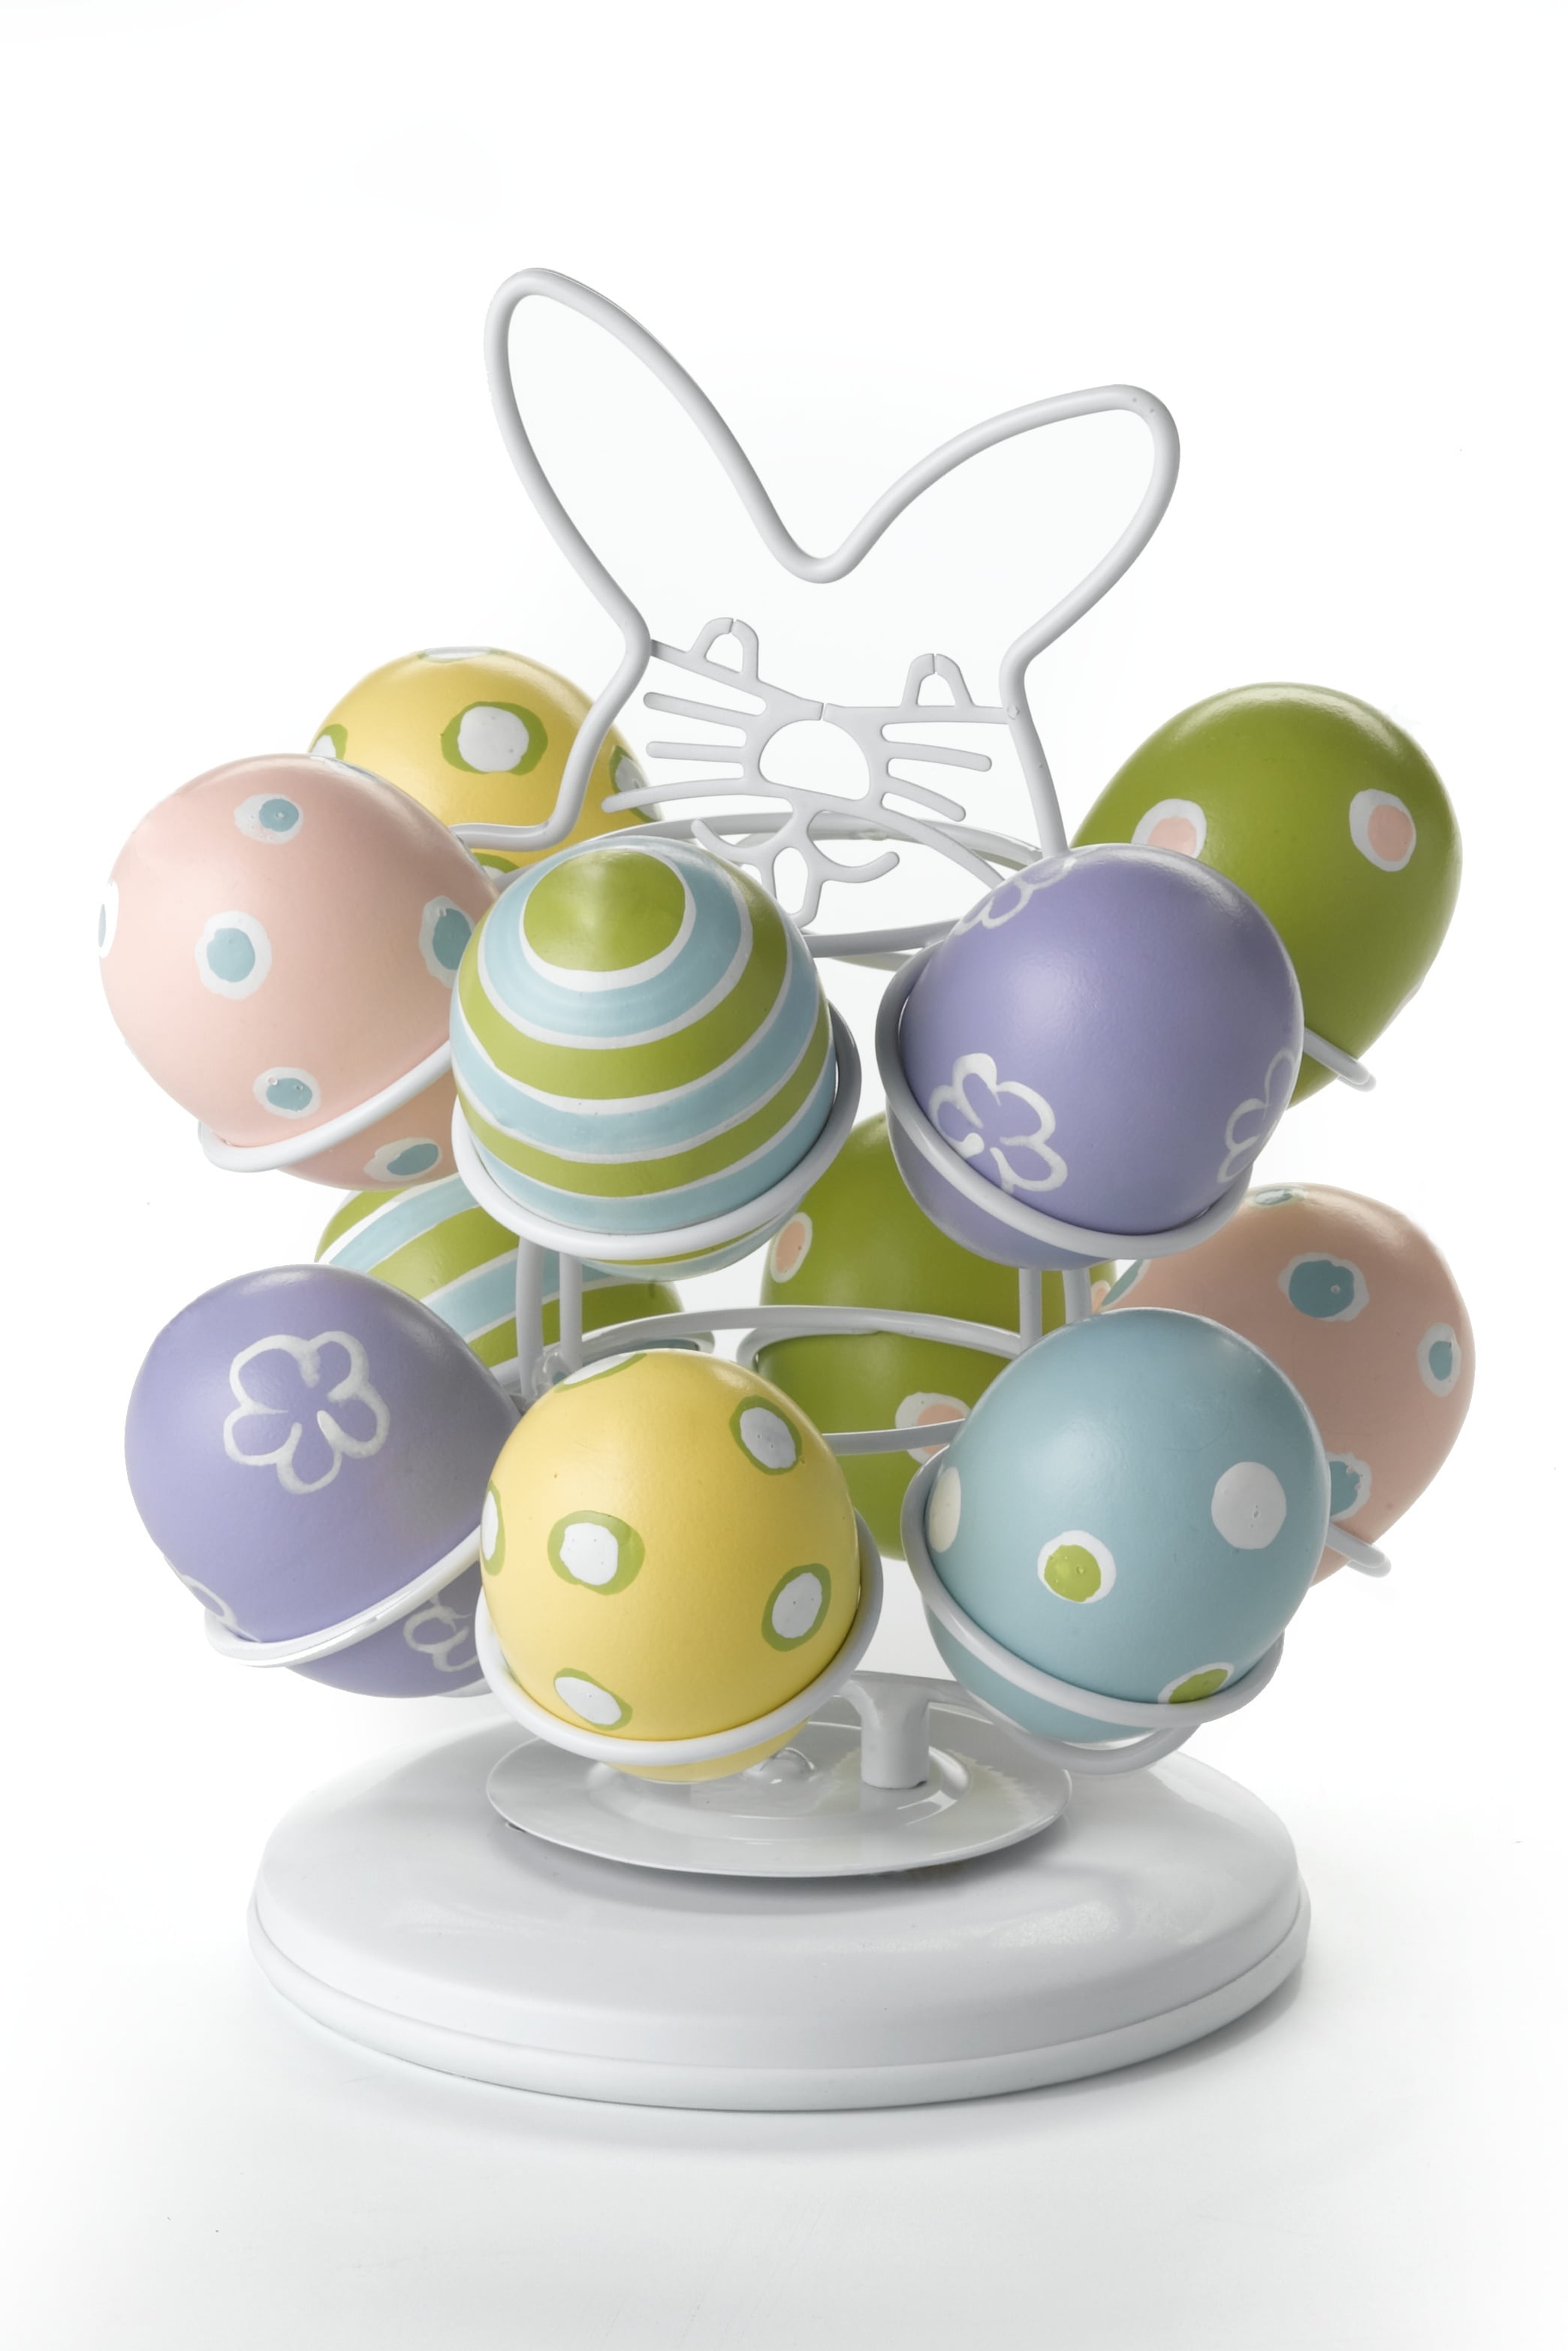 Nifty Easter Egg Carousel - White Powder Coat Finish, Decorative ...